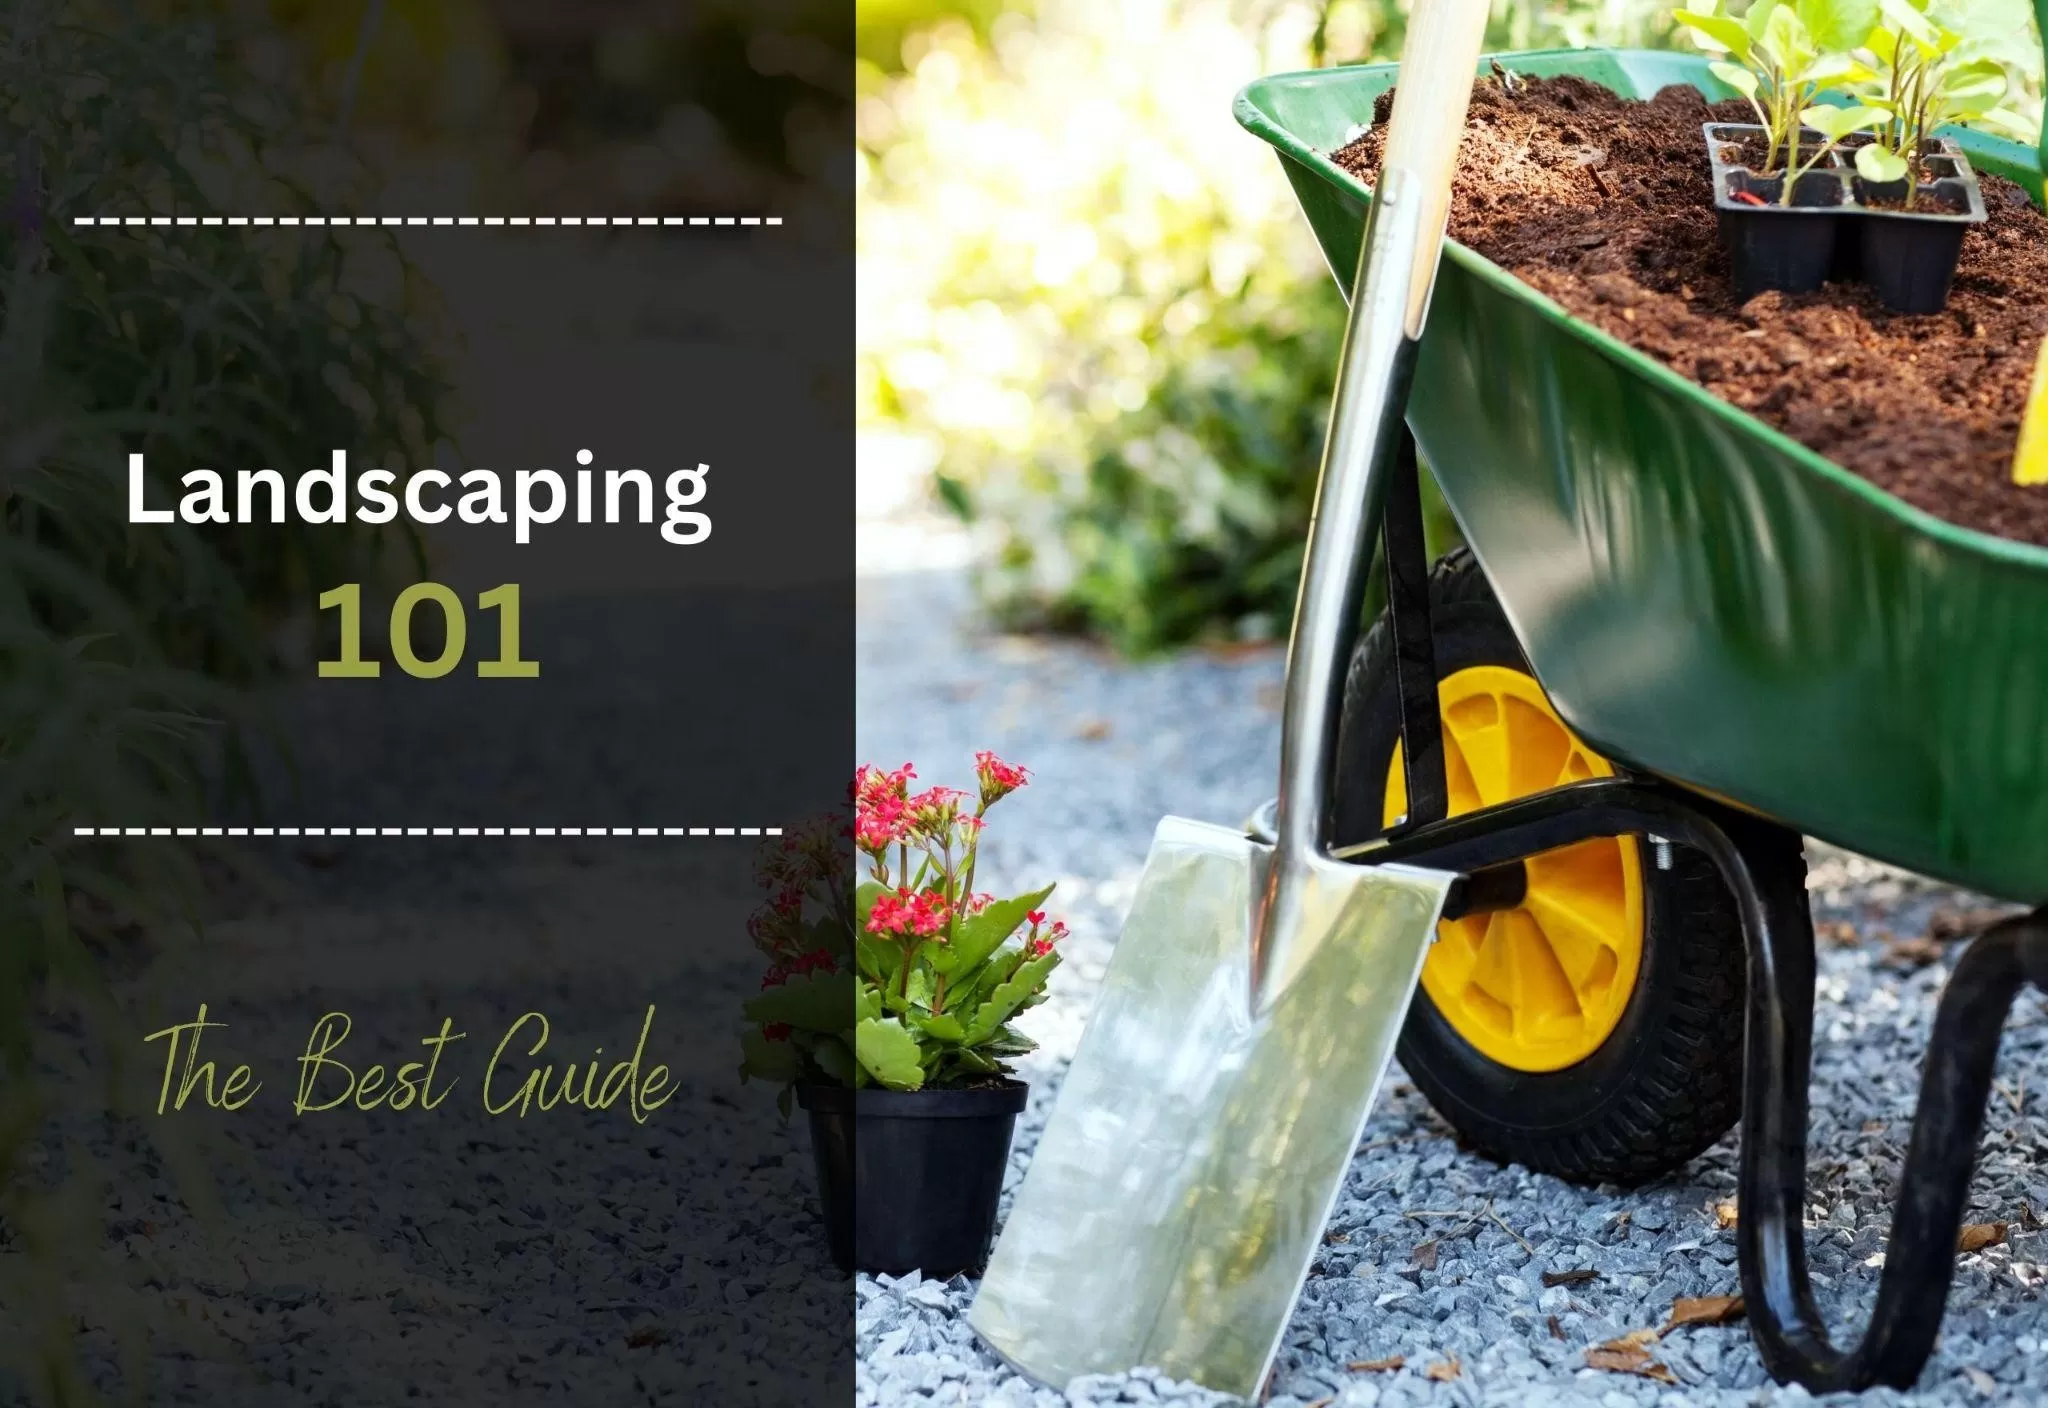 Easy landscaping guide for beginners